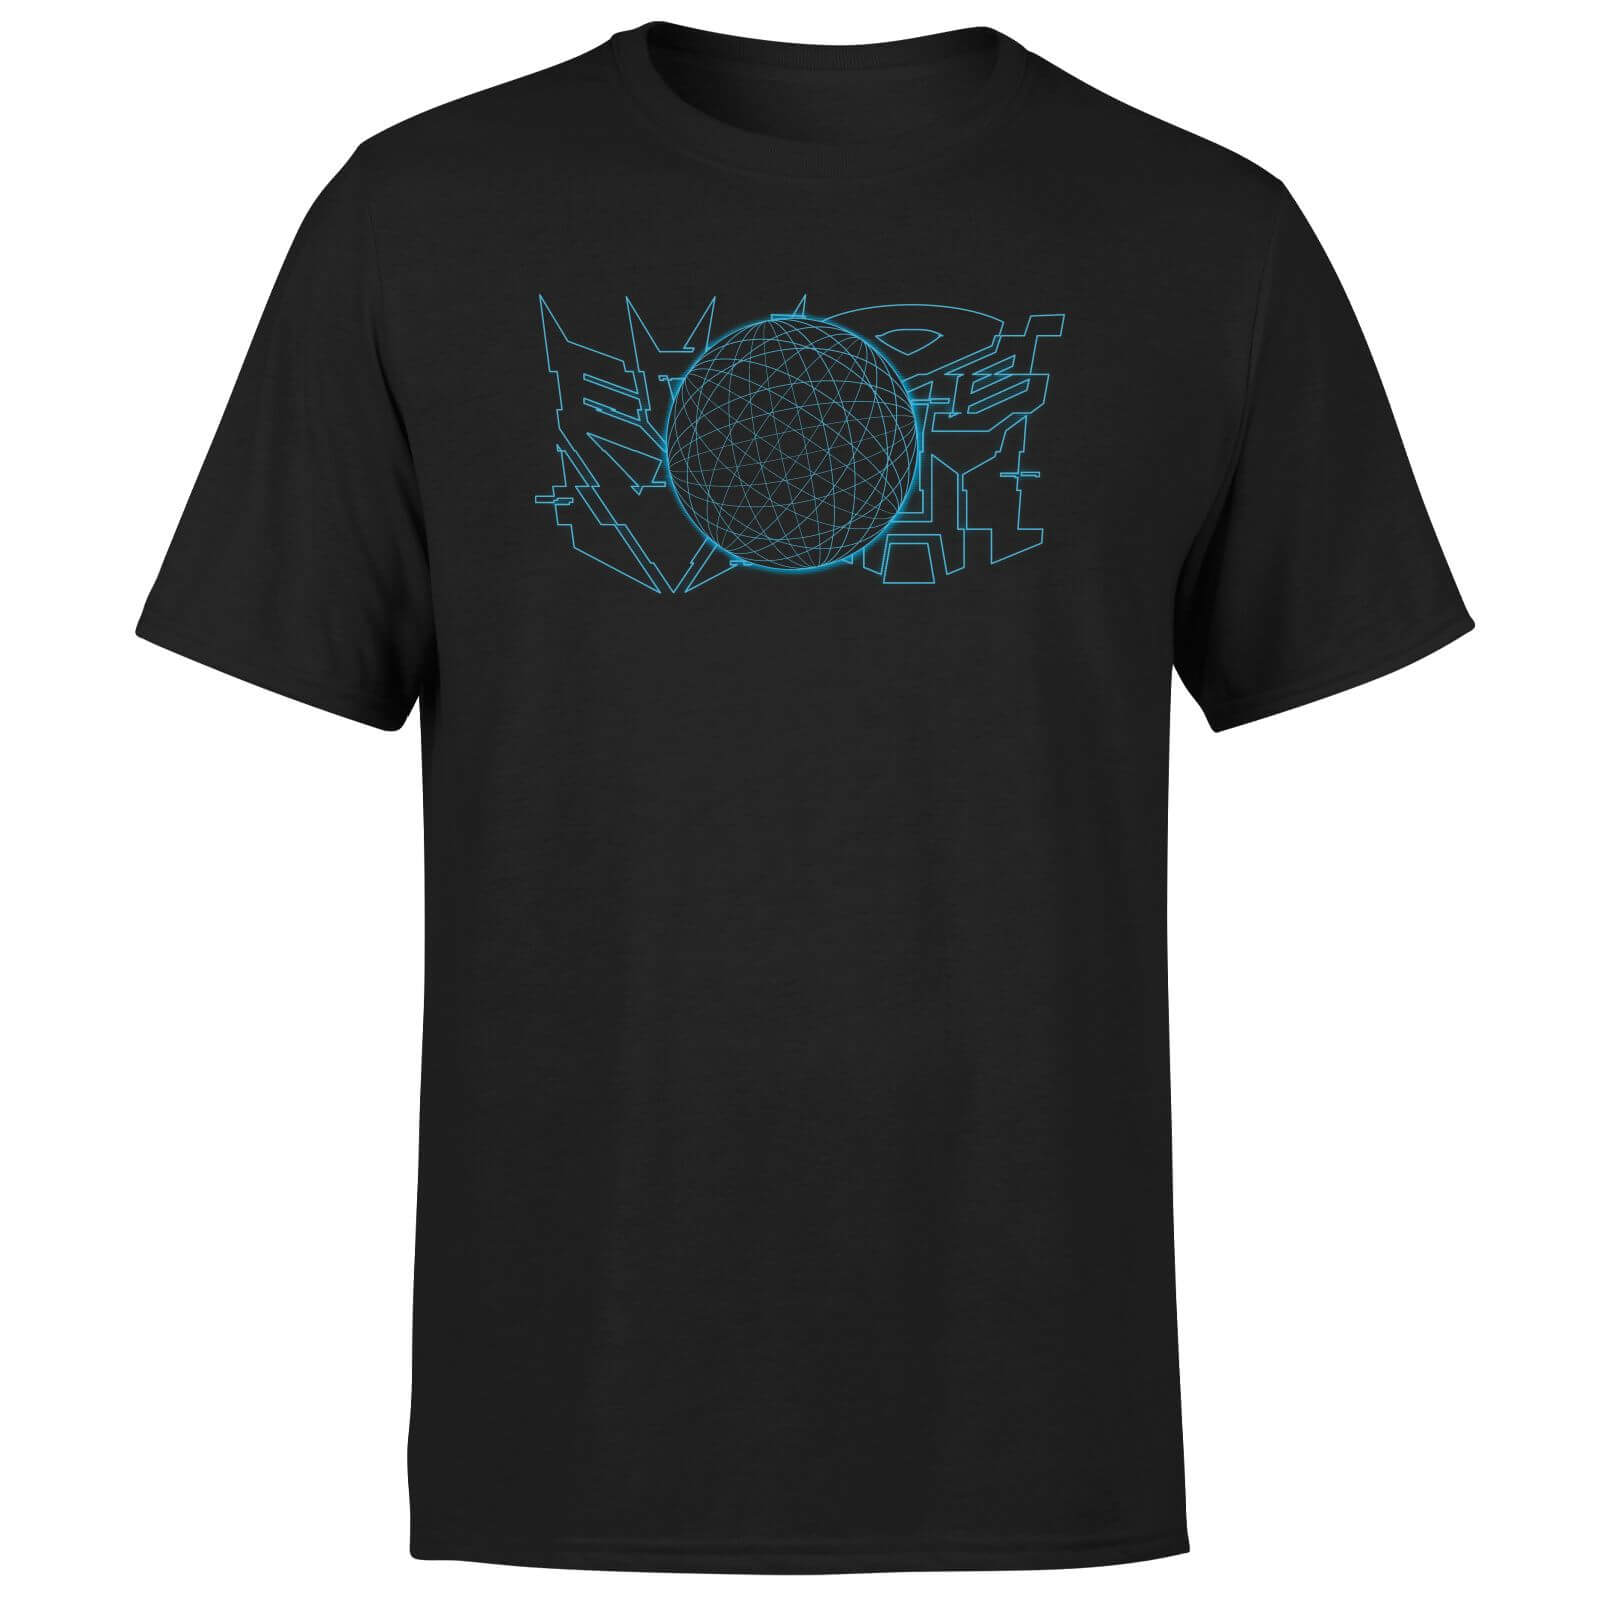 Transformers War For Cybertron Unisex T-Shirt - Black - L - Black